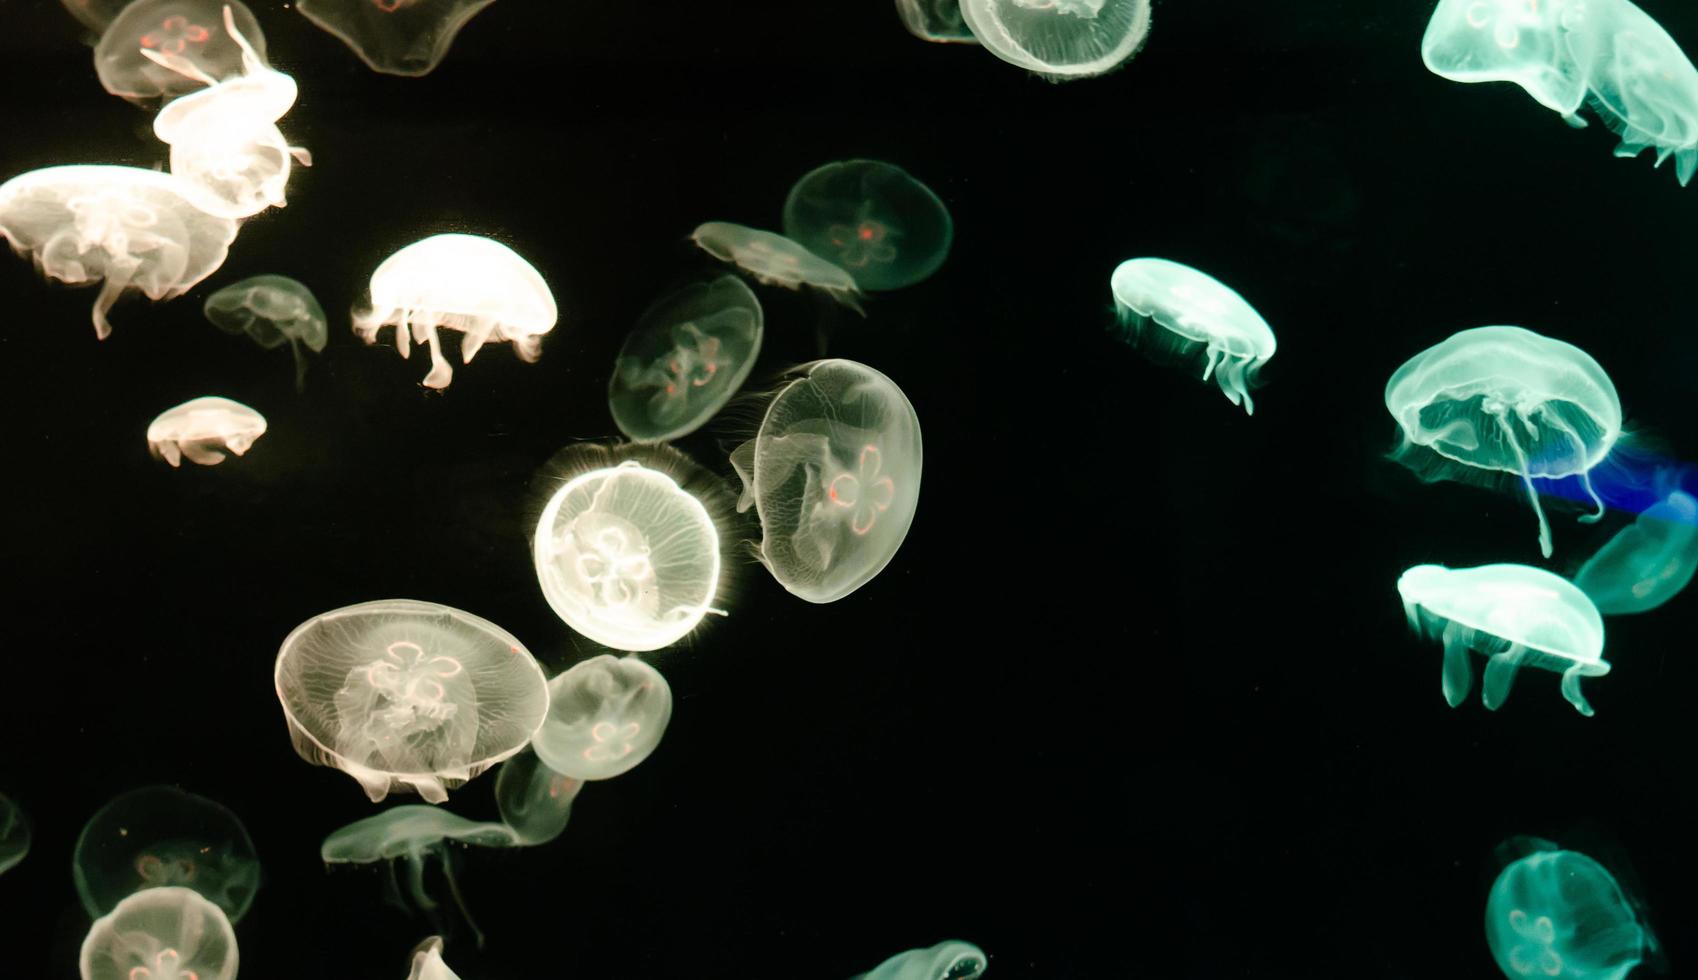 Jellyfish in an aquarium photo